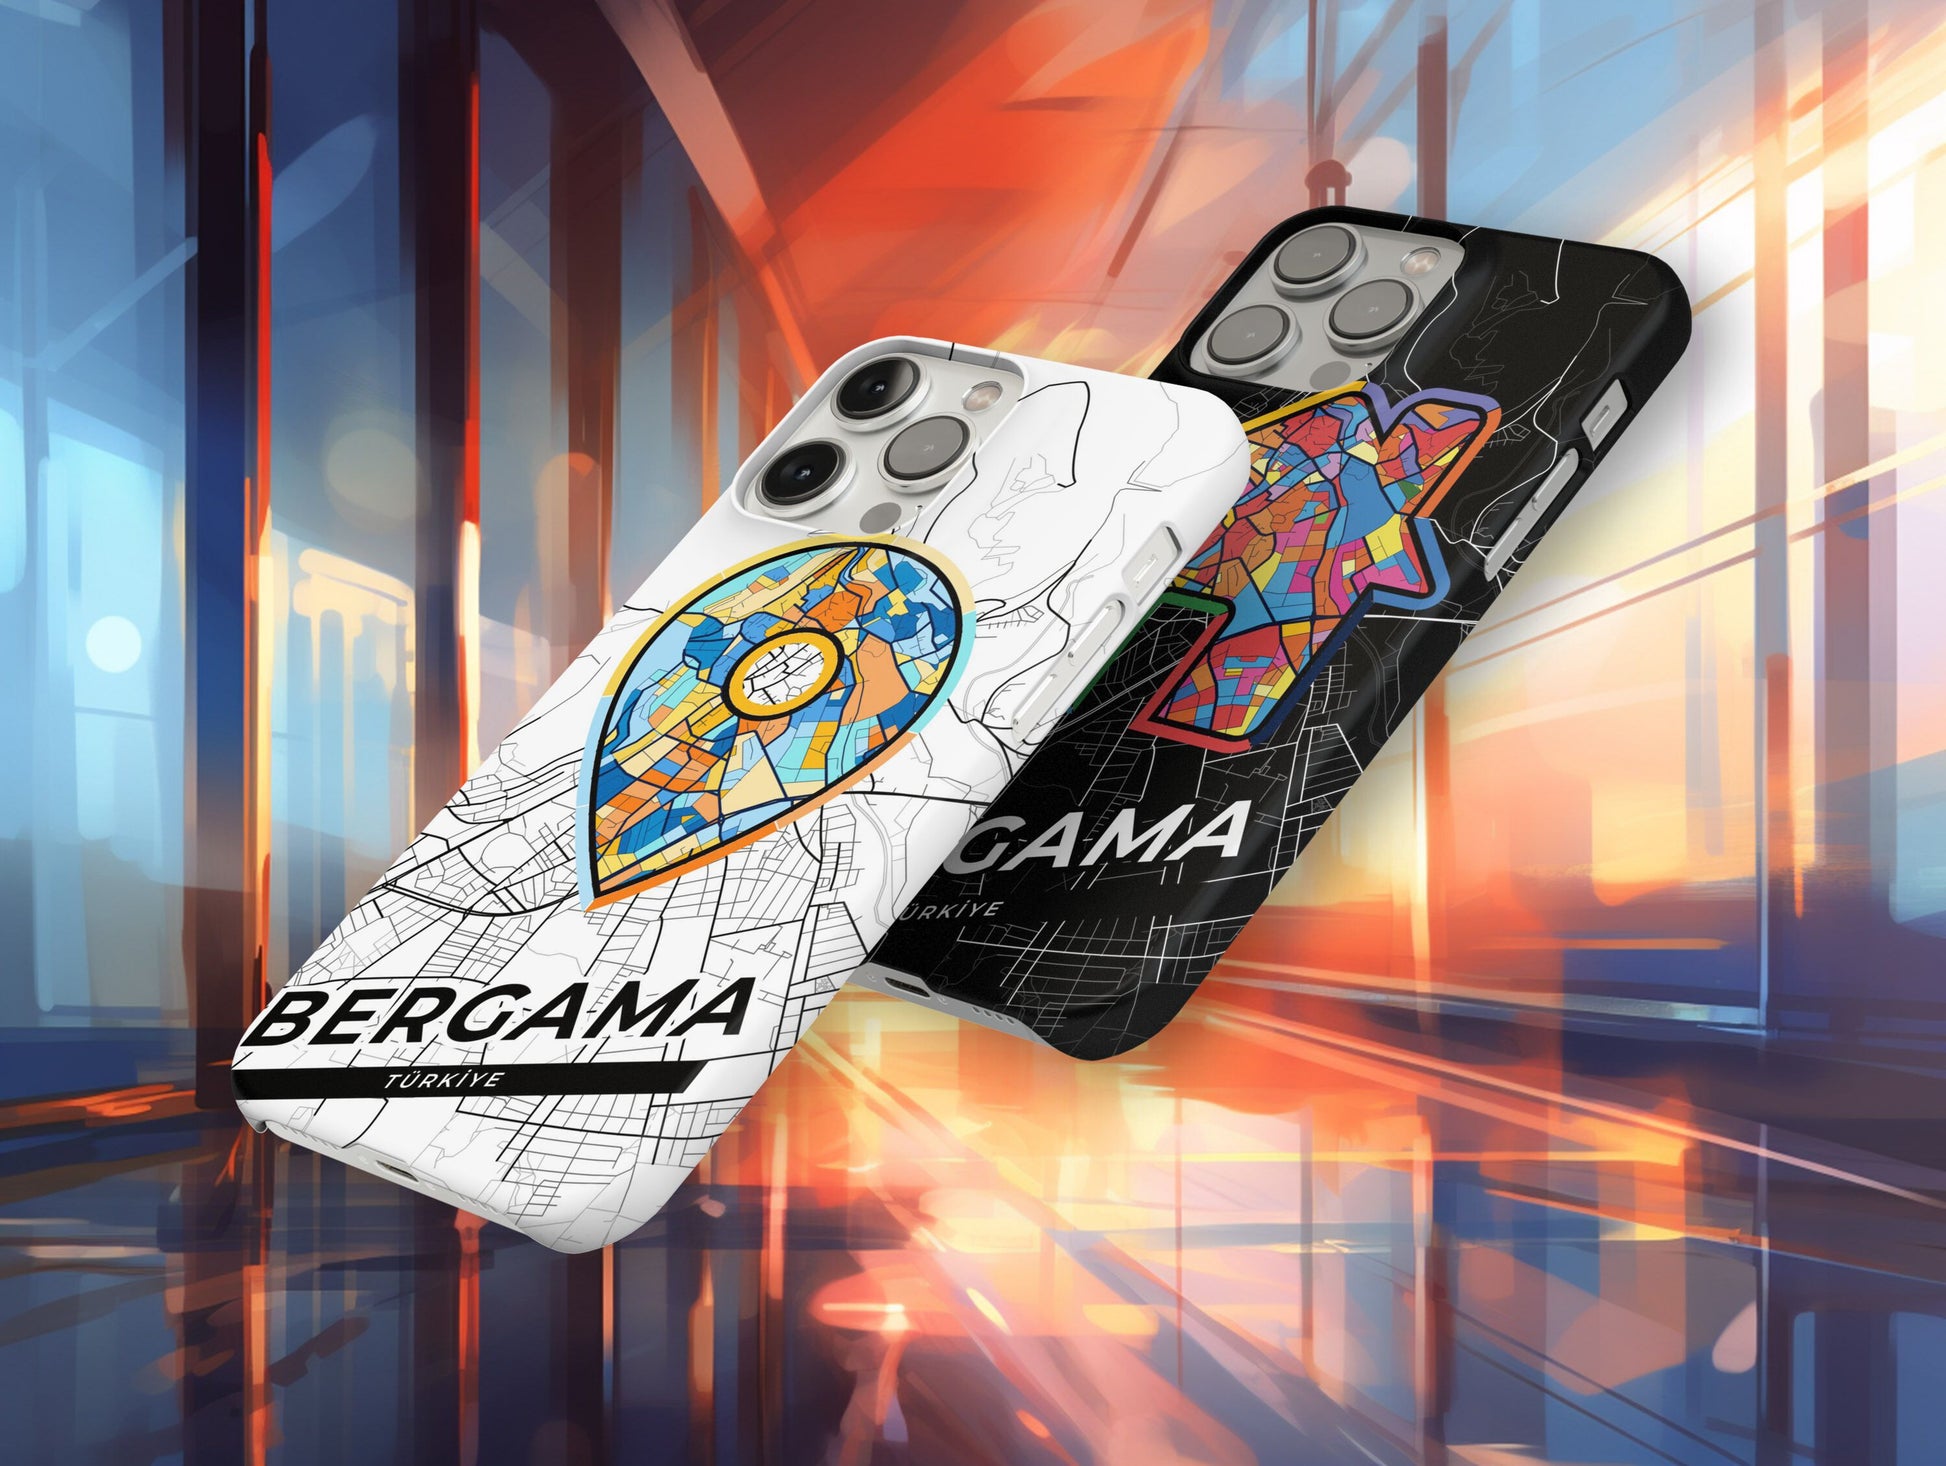 Bergama Turkey slim phone case with colorful icon. Birthday, wedding or housewarming gift. Couple match cases.